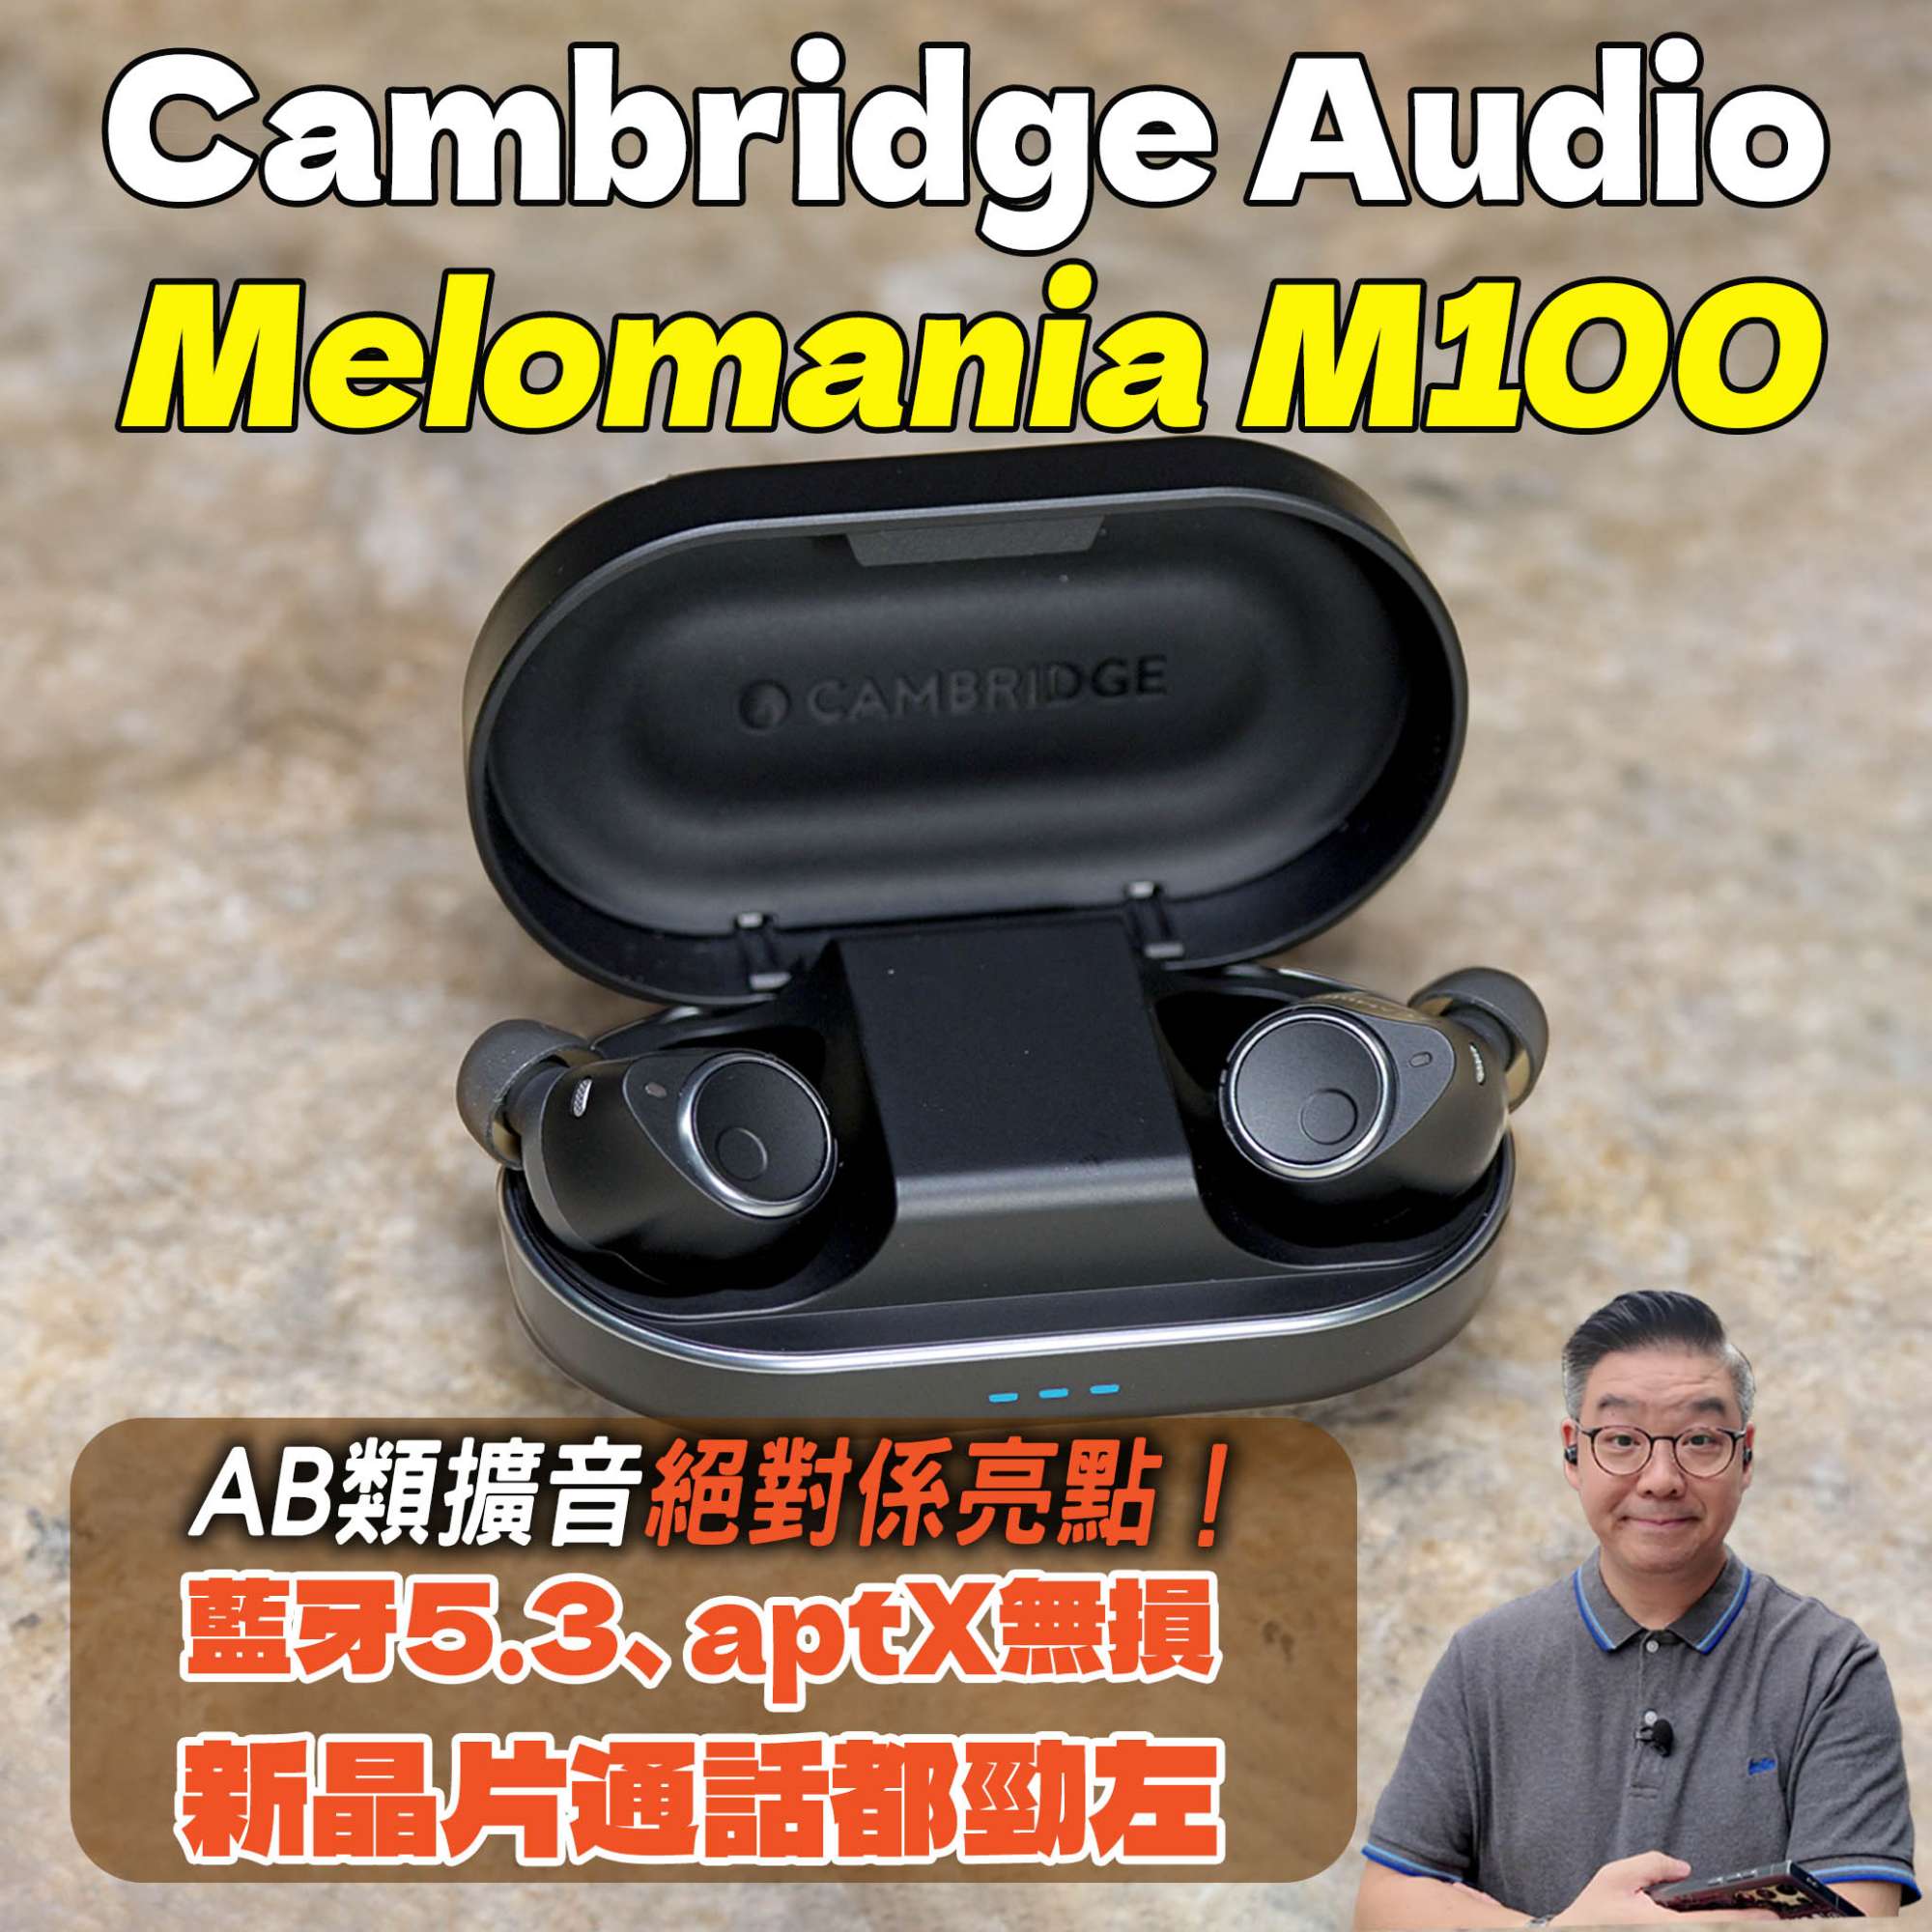 Cambridge M100 review IG copy.jpg